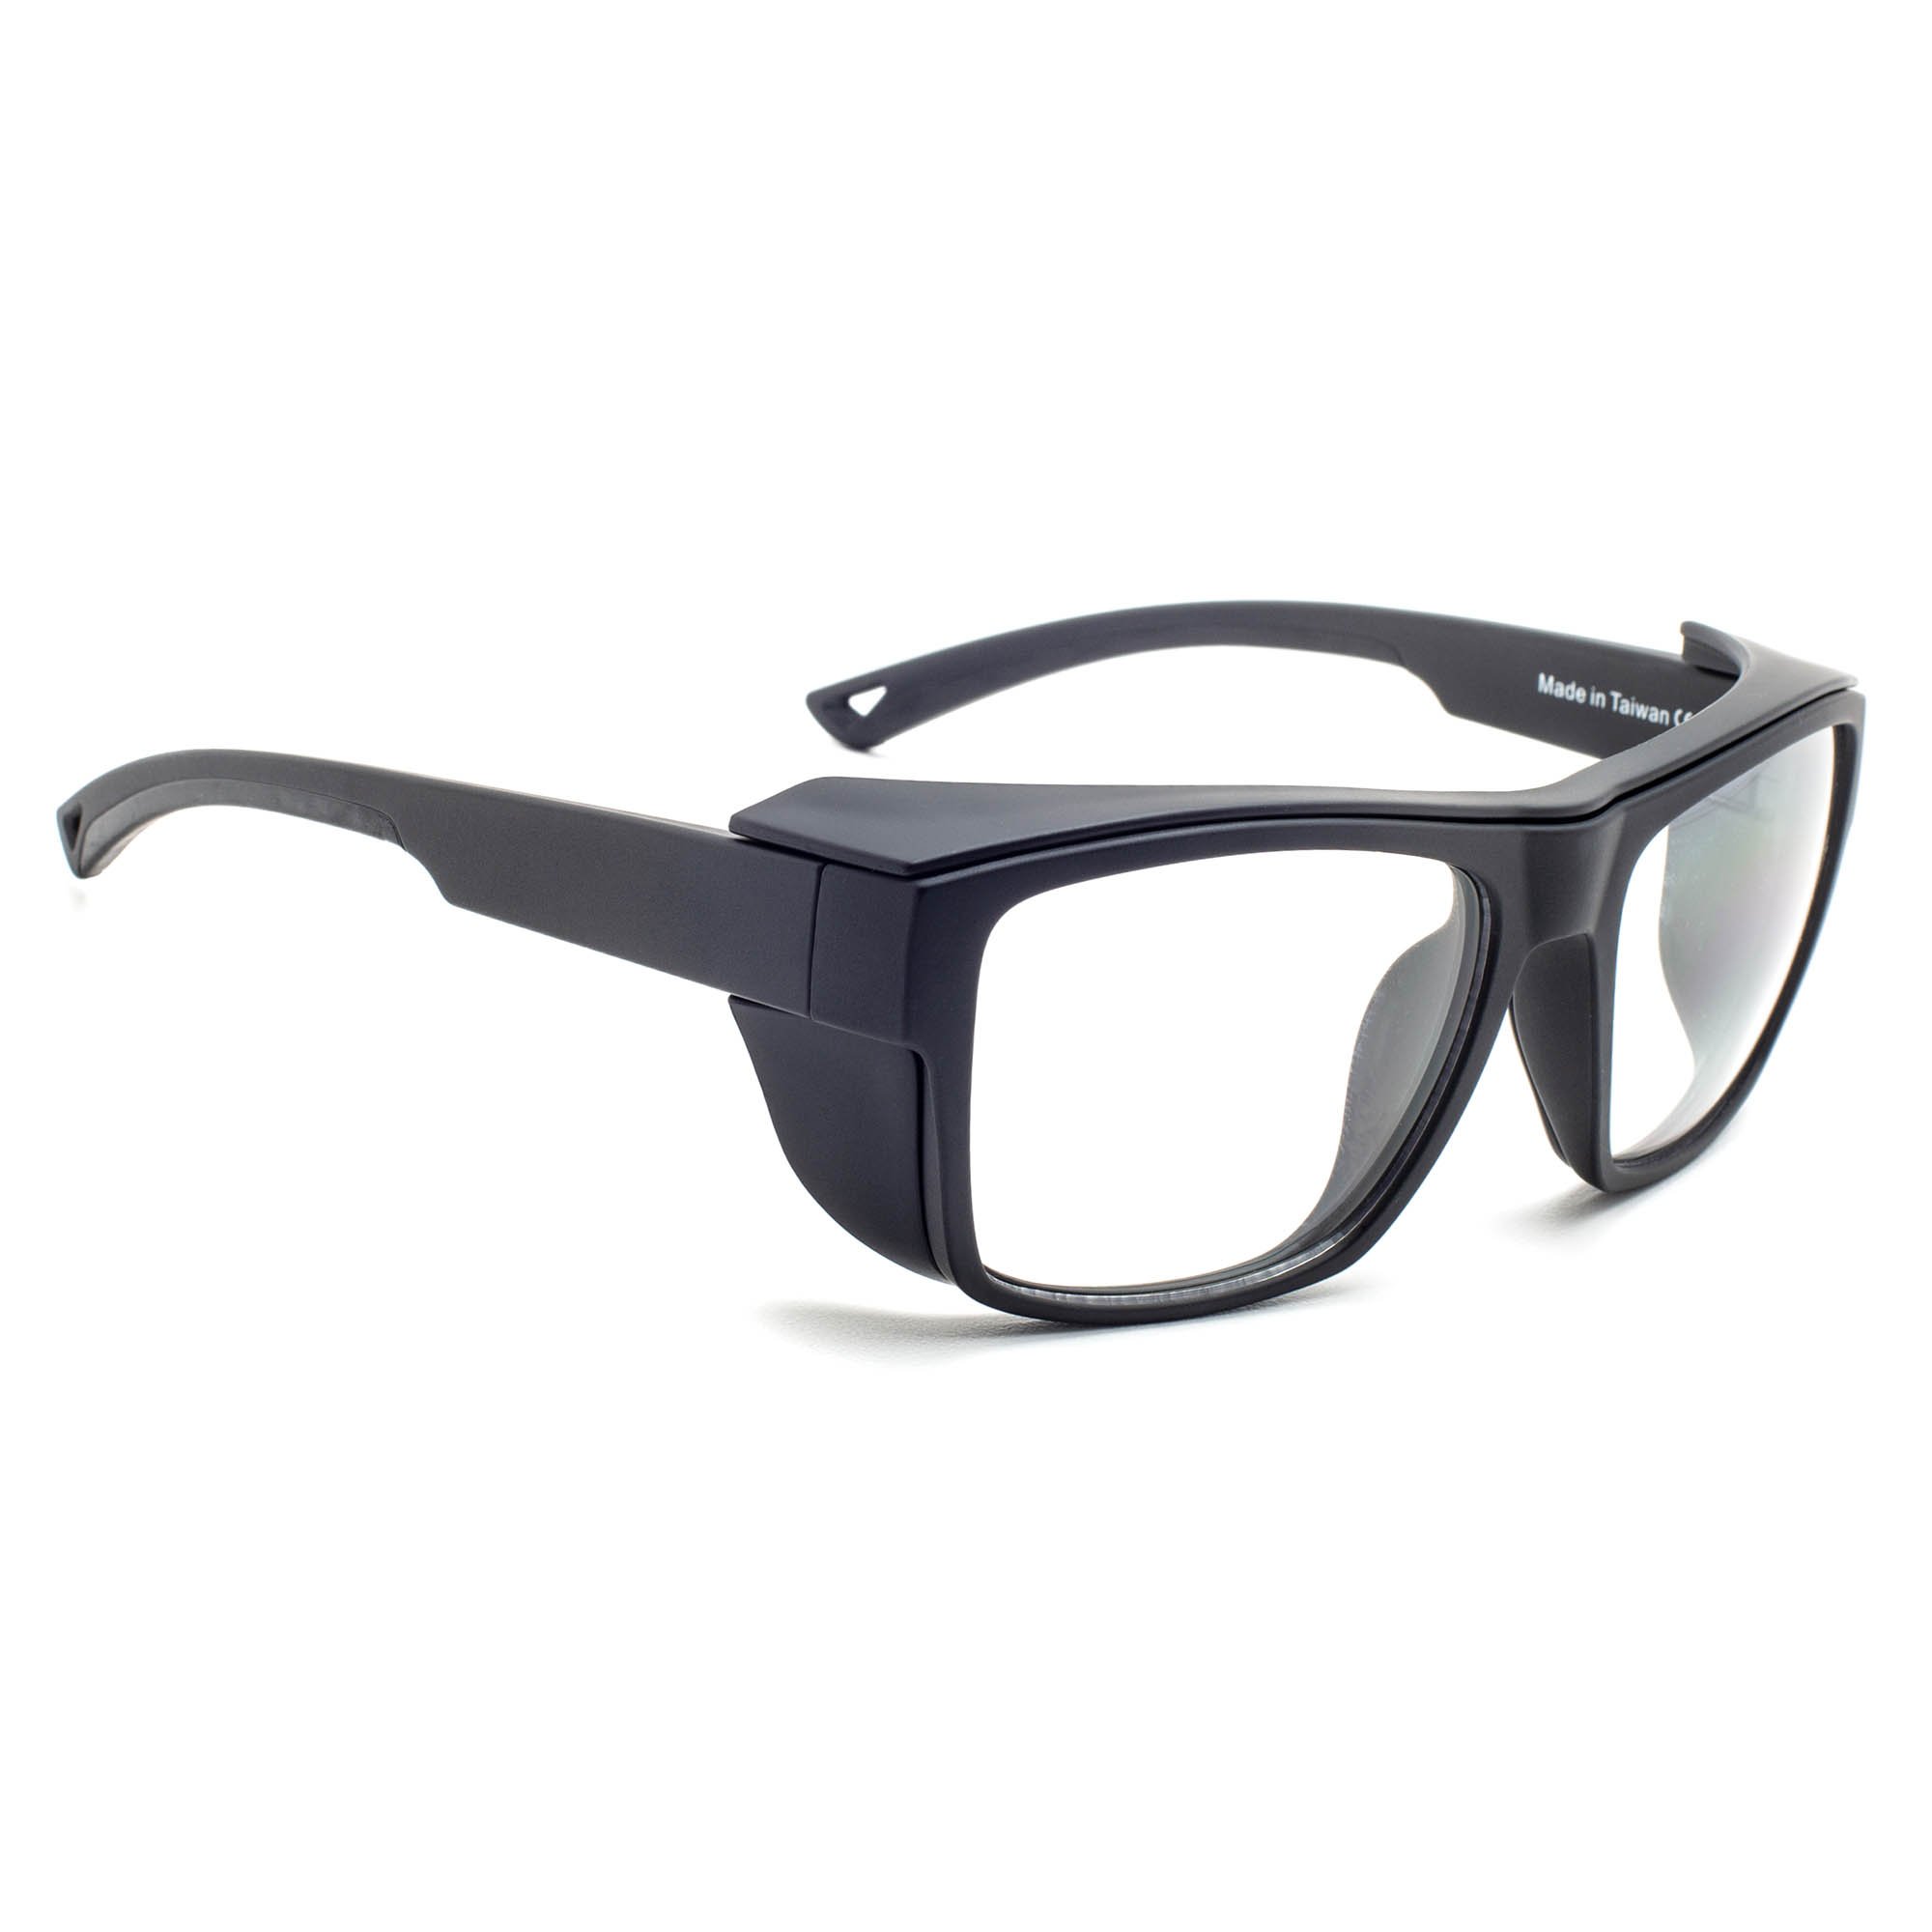 RG-X25 Plastic Frame Radiation Glasses with Side Shield Model X25